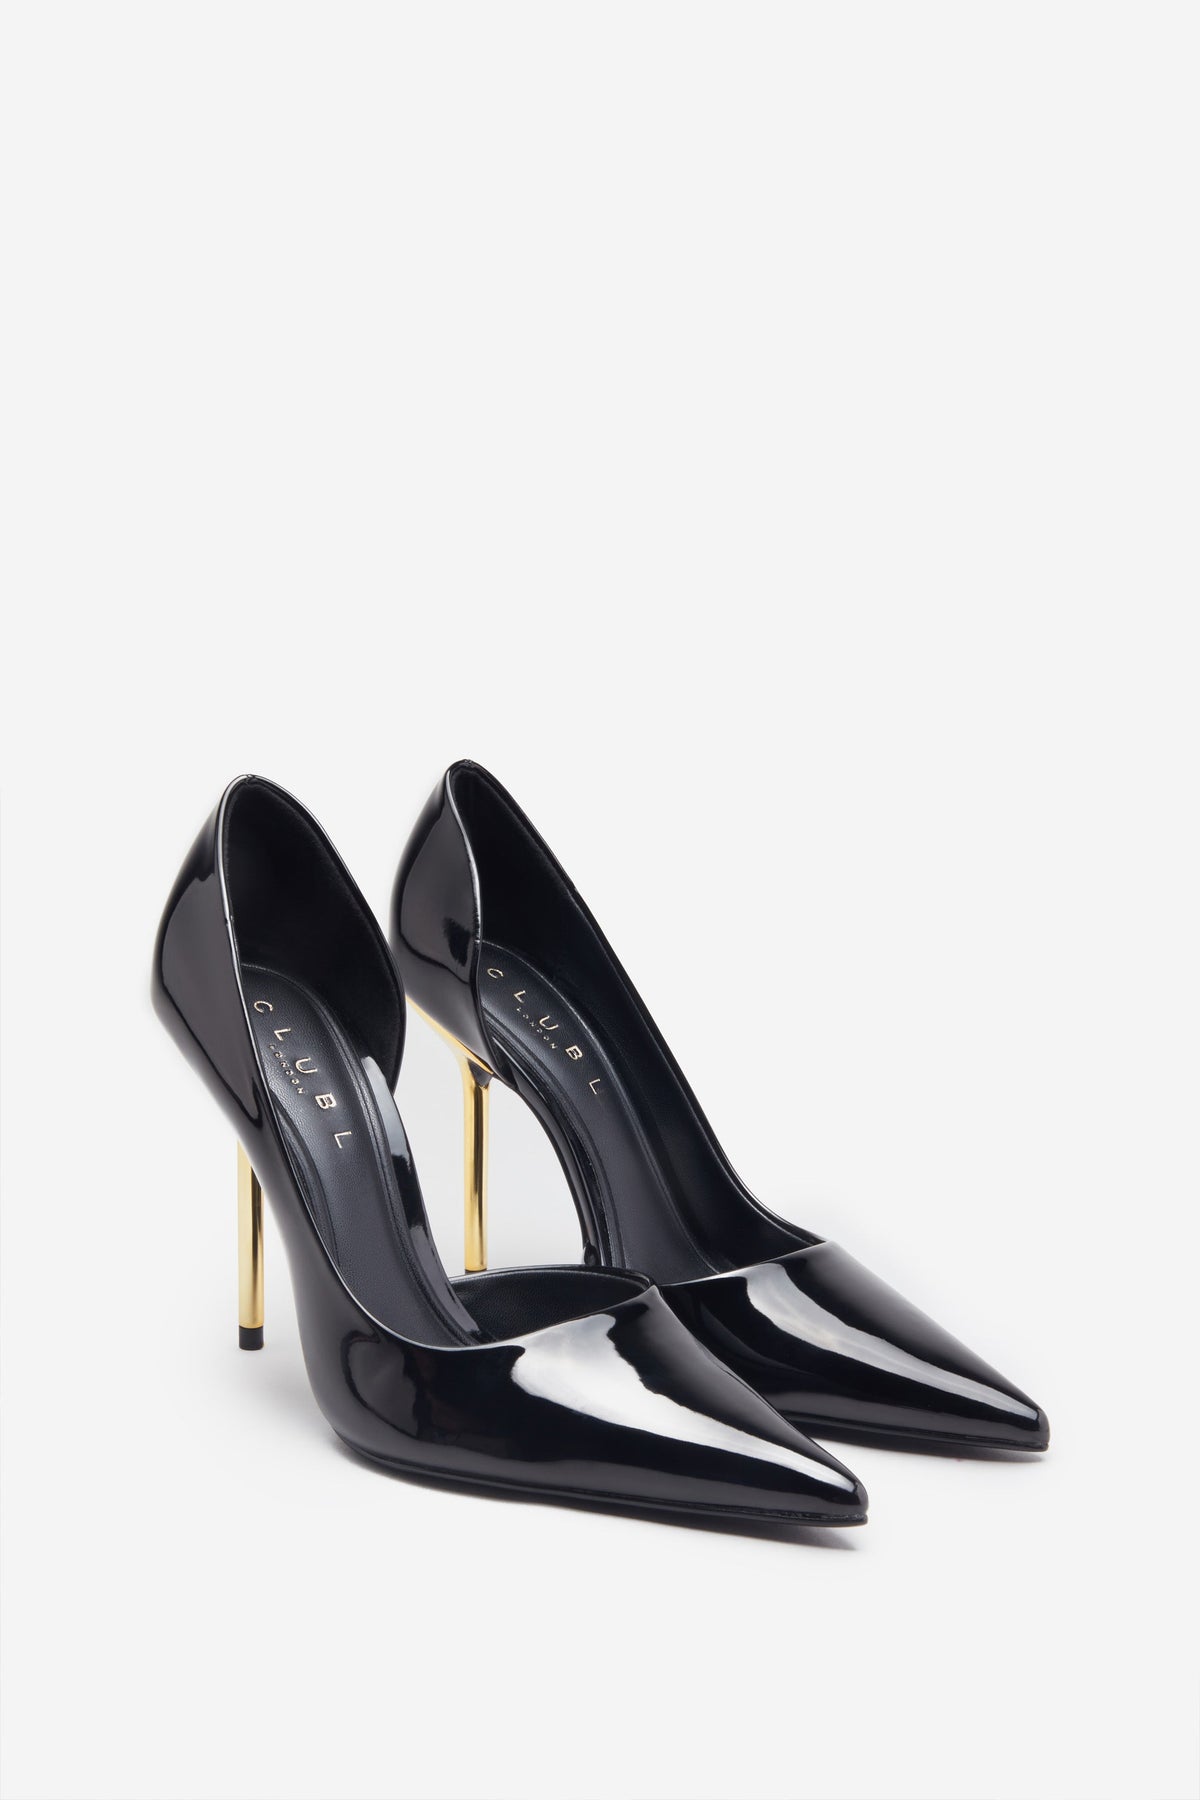 Amazon.com | WAYDERNS Women's Black Patent Leather Pointed Toe Slip On 2  Inch Low Kitten Heel Pumps Business Office Work Dress Shoes Size 5 -  Zapatos de Vestir para Mujer | Pumps